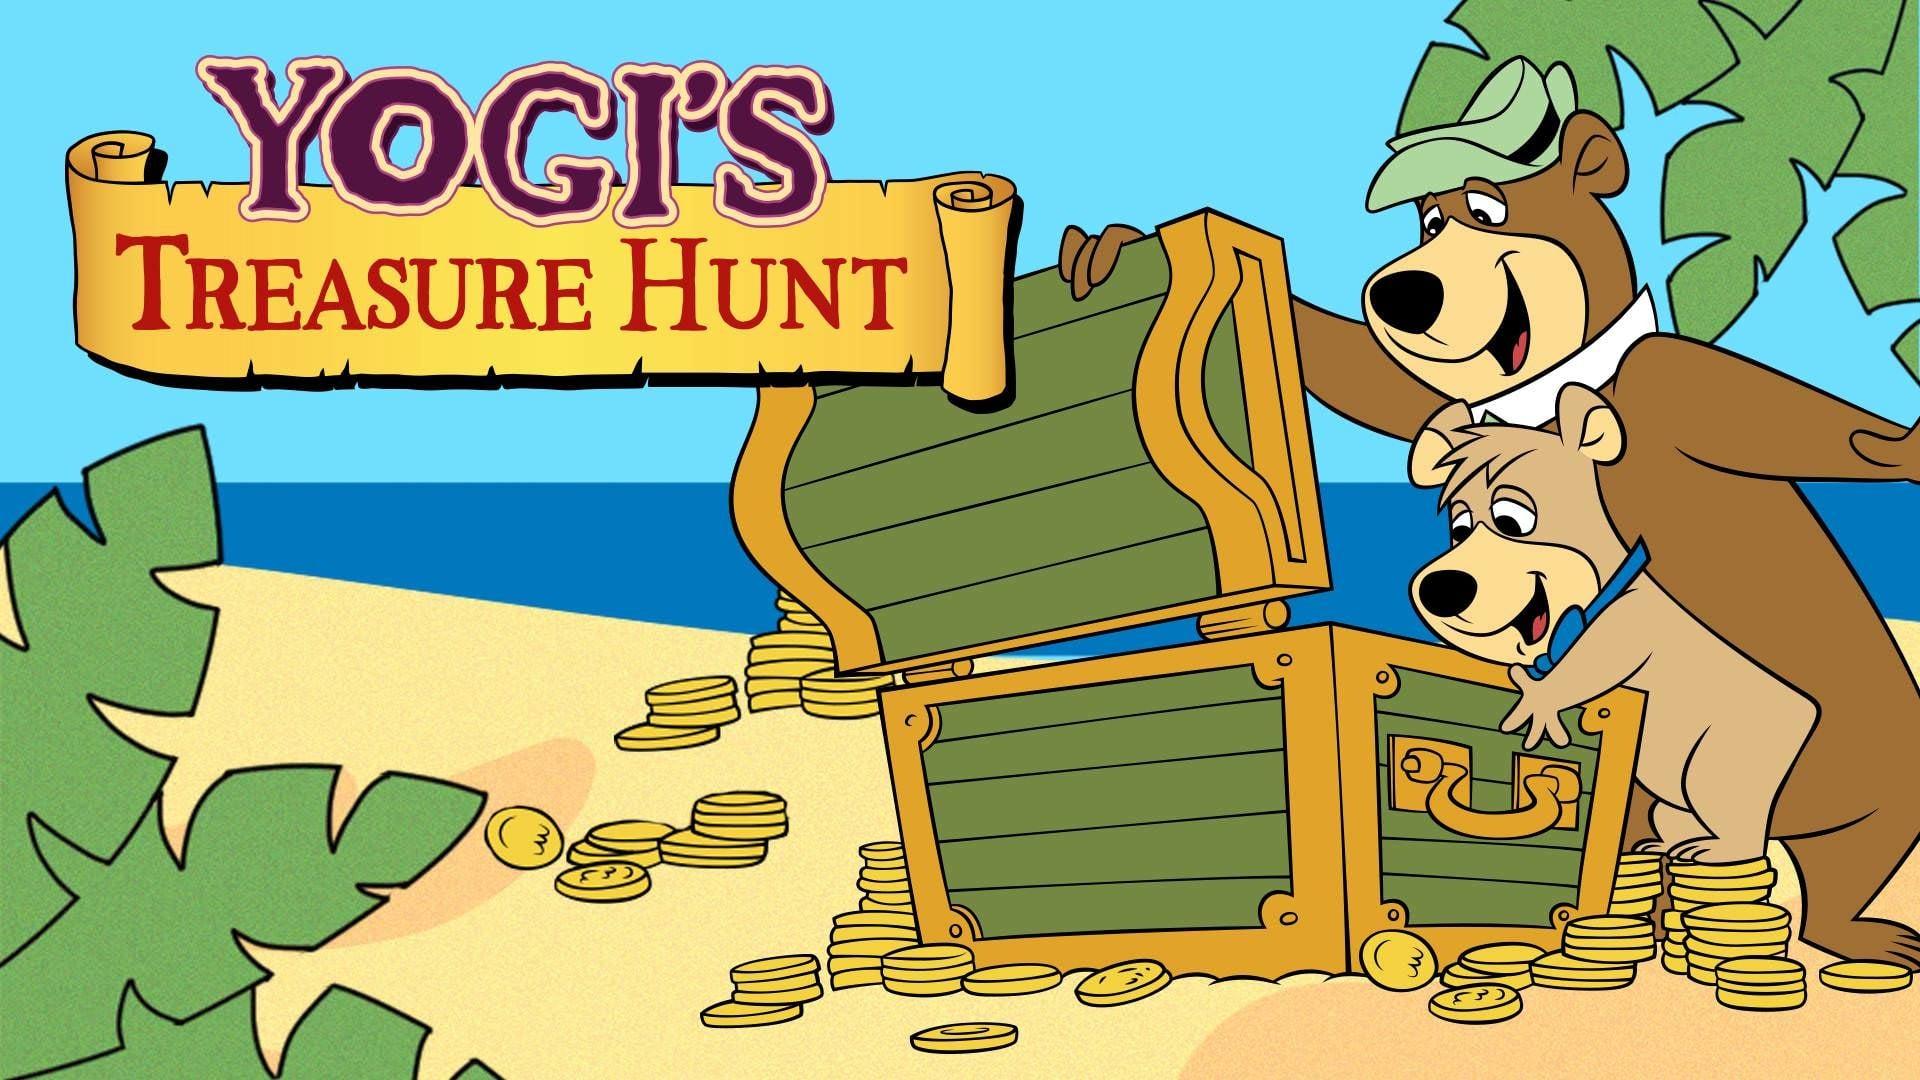 Yogi's Treasure Hunt backdrop